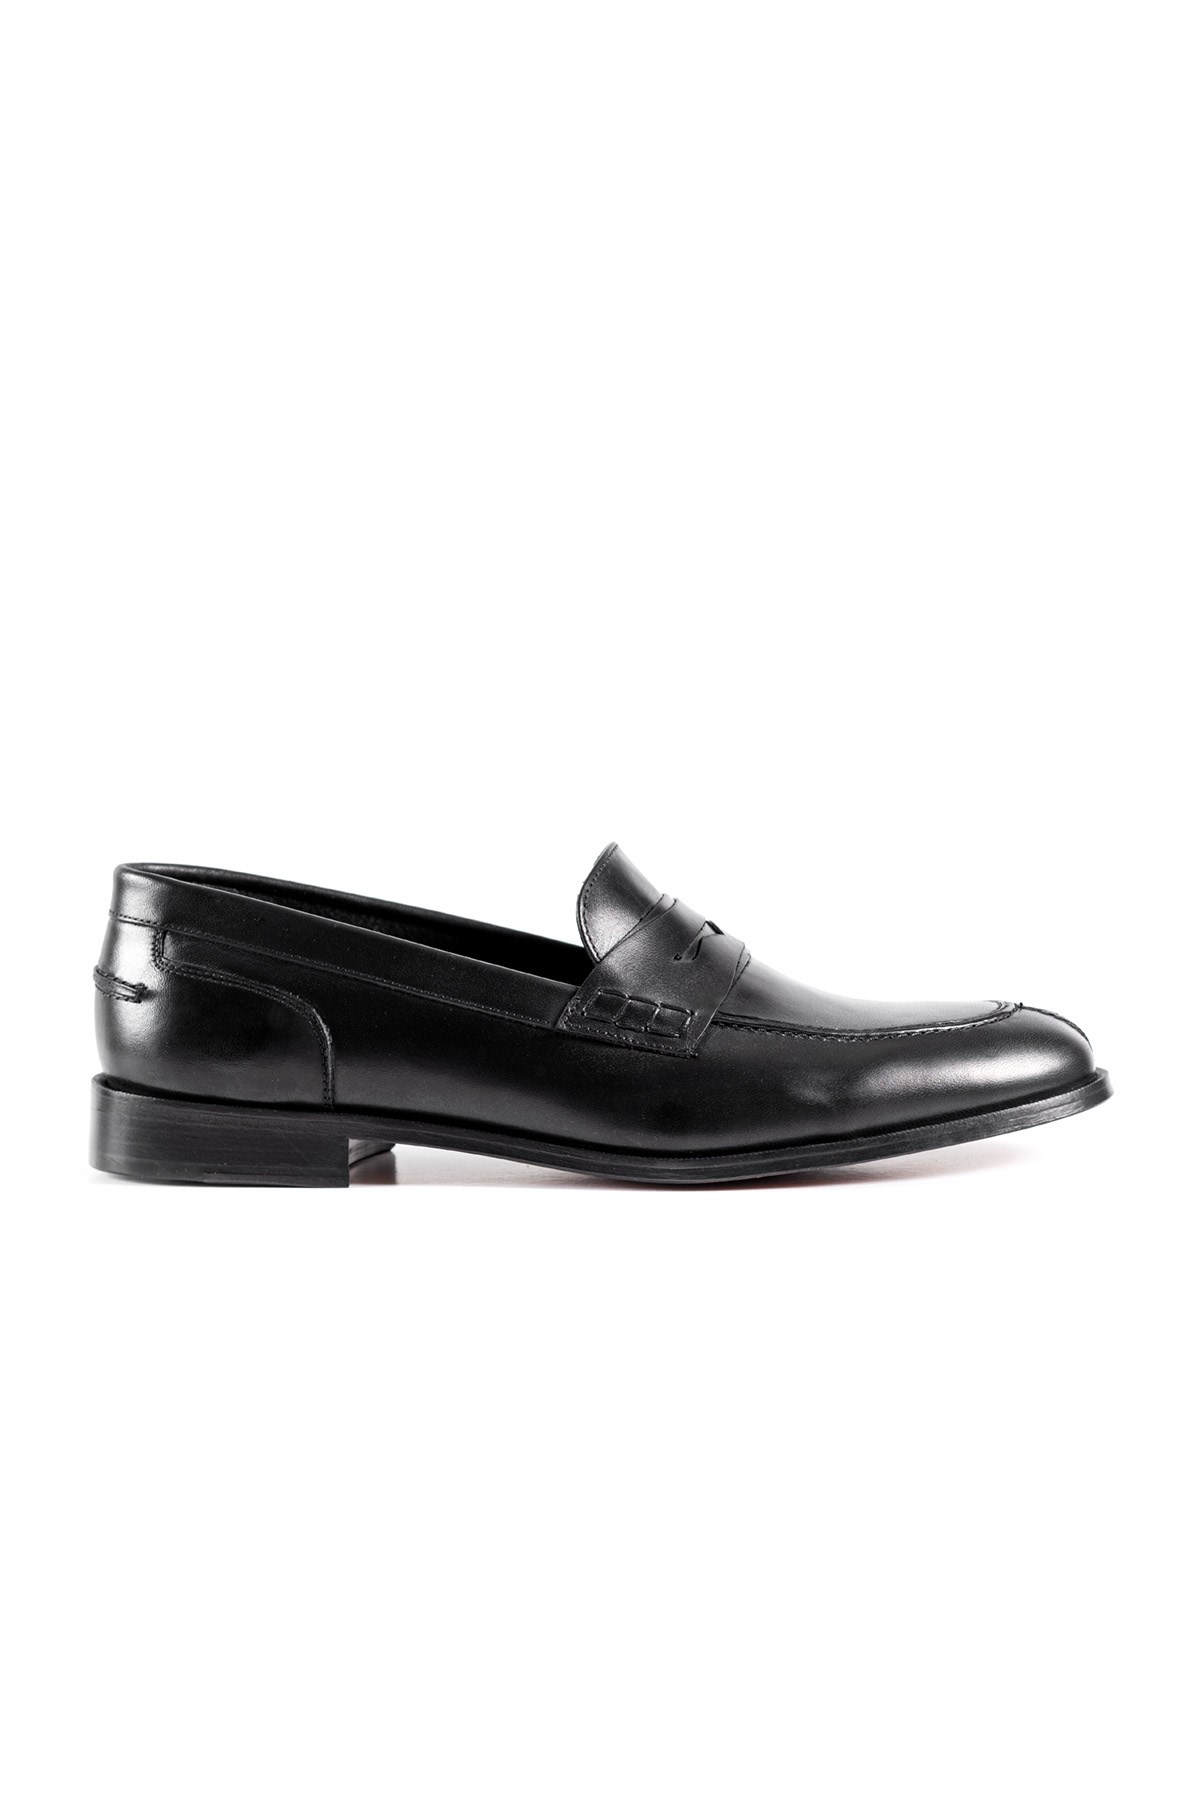 Allaturca Black Genuine Leather Classic Men's Shoes